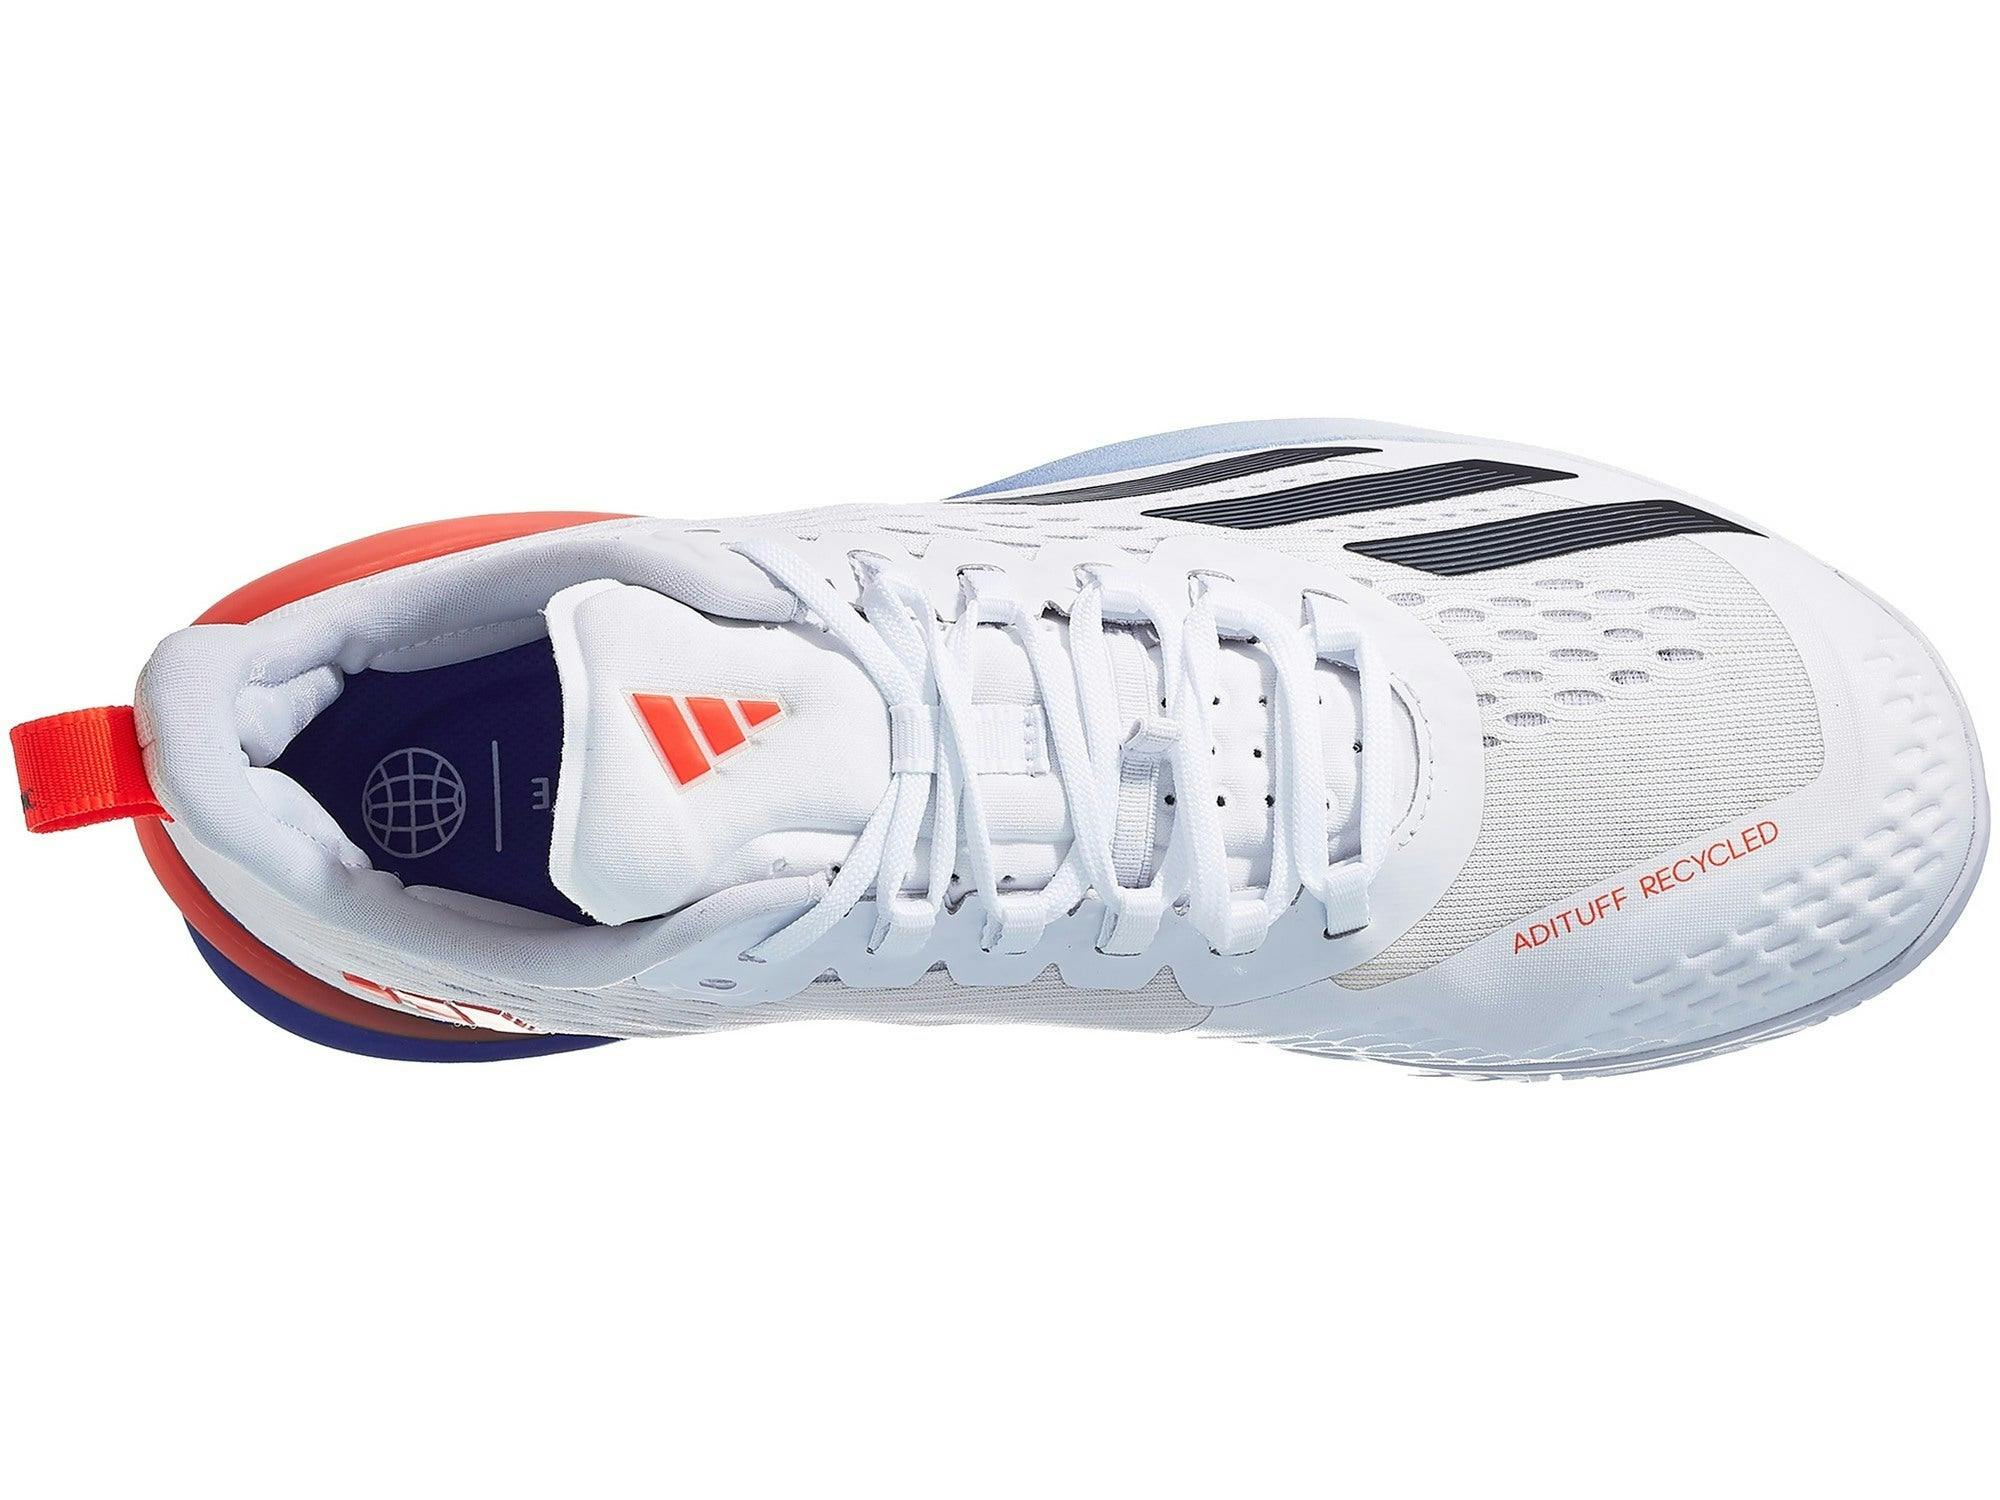 Adidas Men's Adizero Cybersonic Tennis Shoes